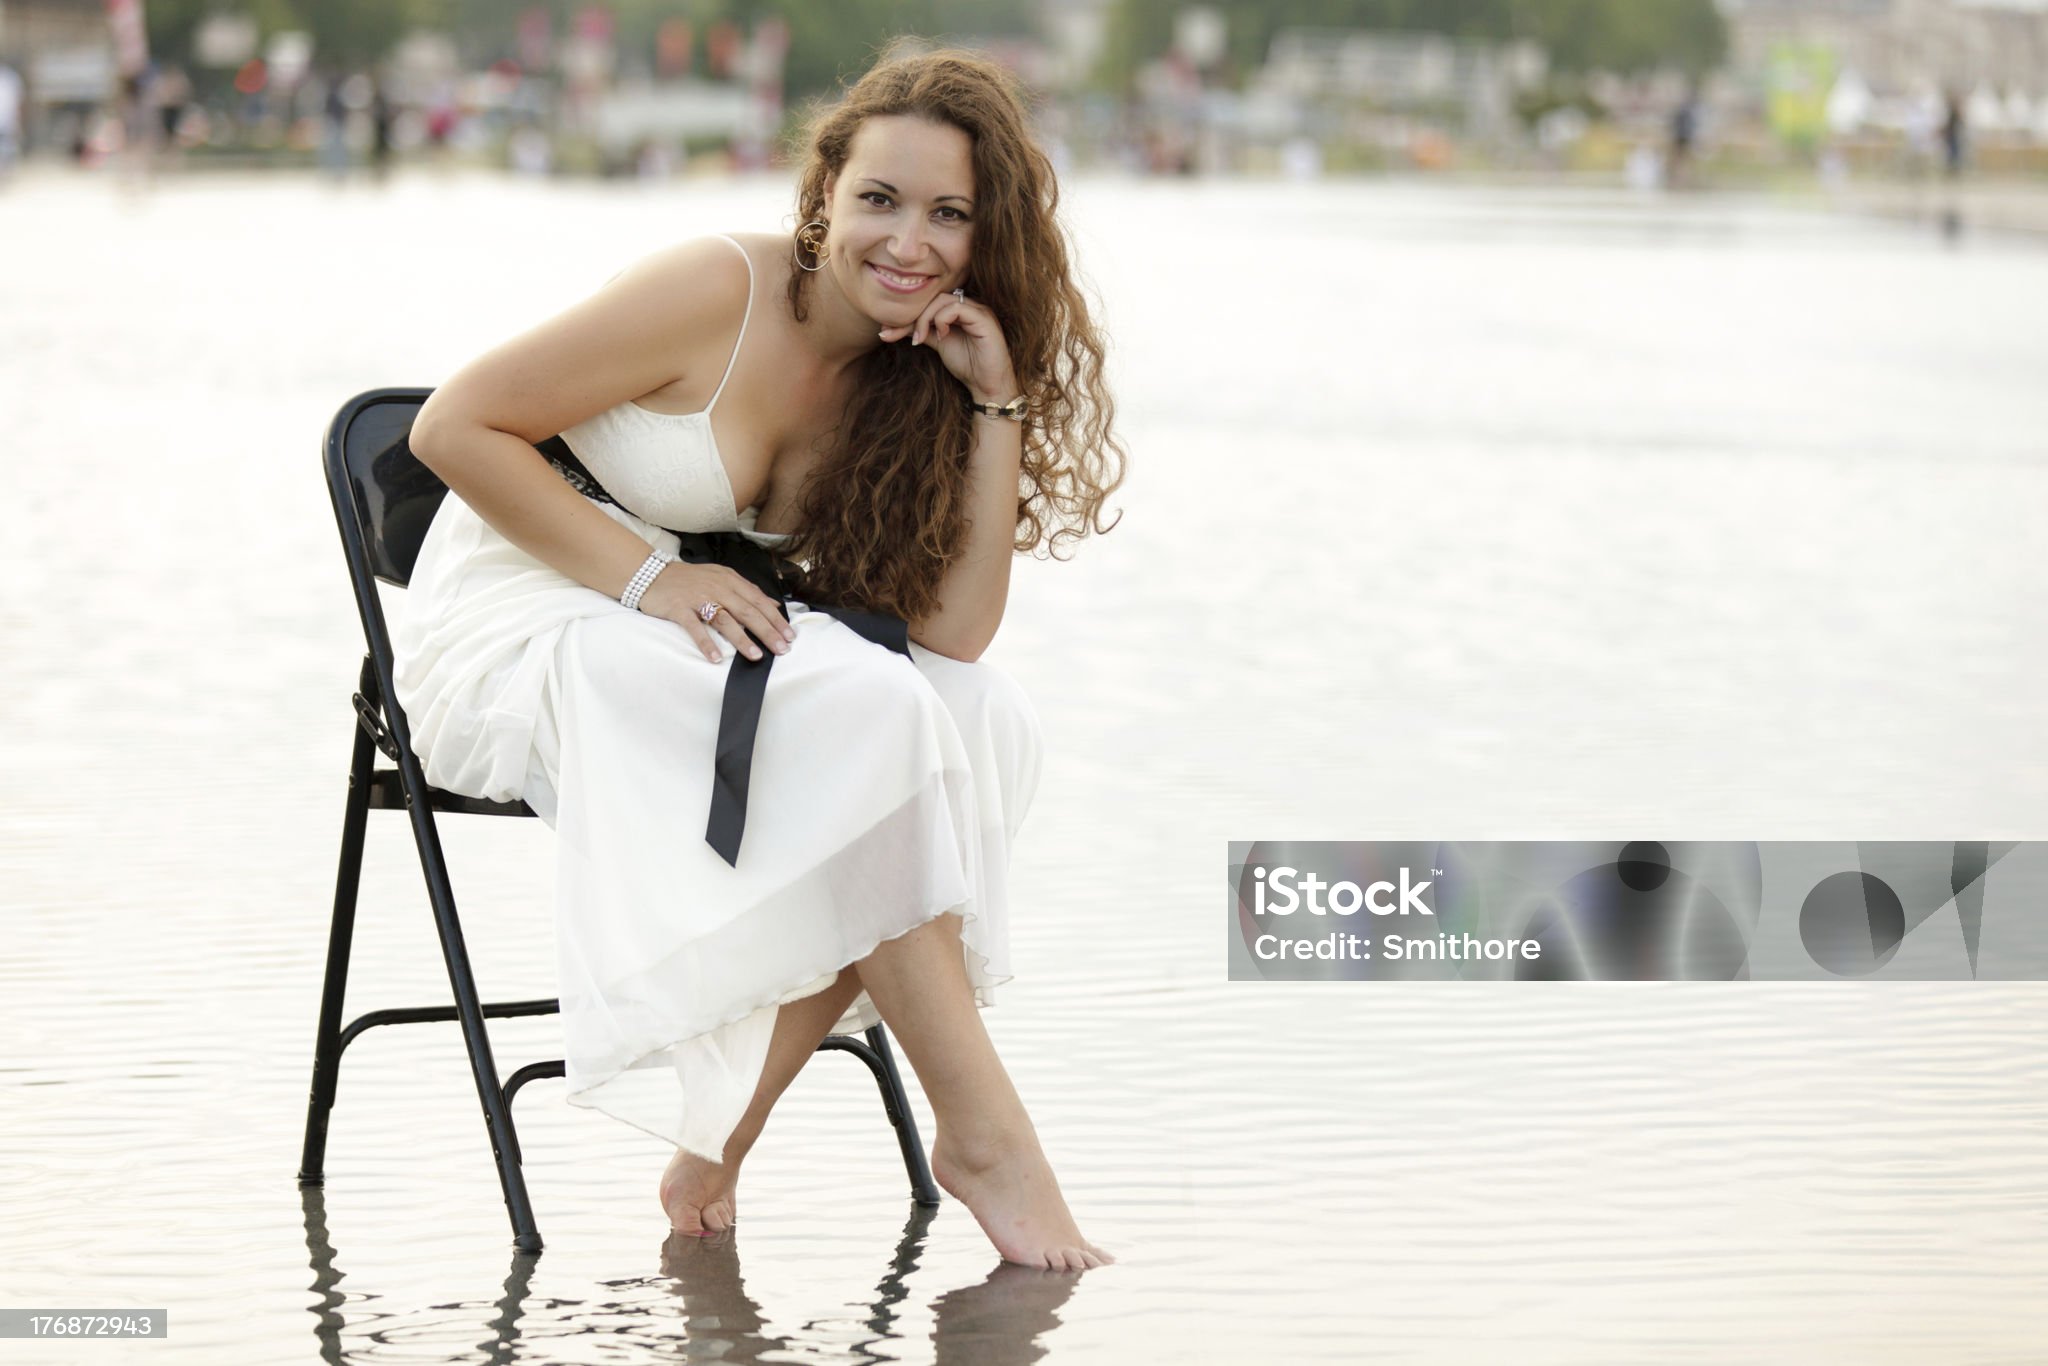 https://media.istockphoto.com/id/176872943/photo/woman-posing-on-water.jpg?s=2048x2048&amp;w=is&amp;k=20&amp;c=d5yI4htyULWQbnx3UoolkGAzErBxqHkvw-g4JT9vcQQ=